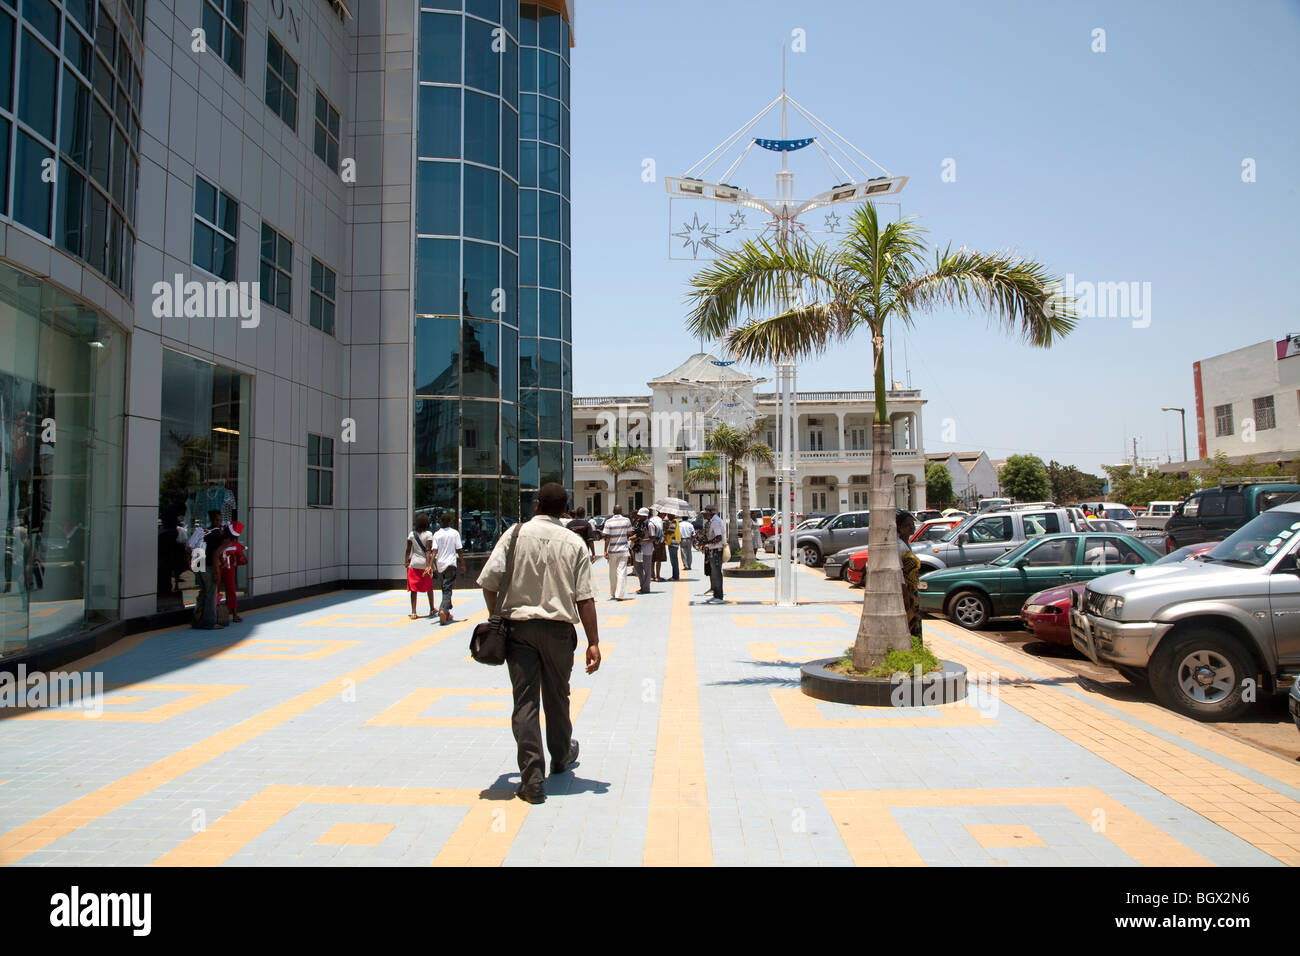 Outside the Maputo Shopping center, Mozambique Stock Photo